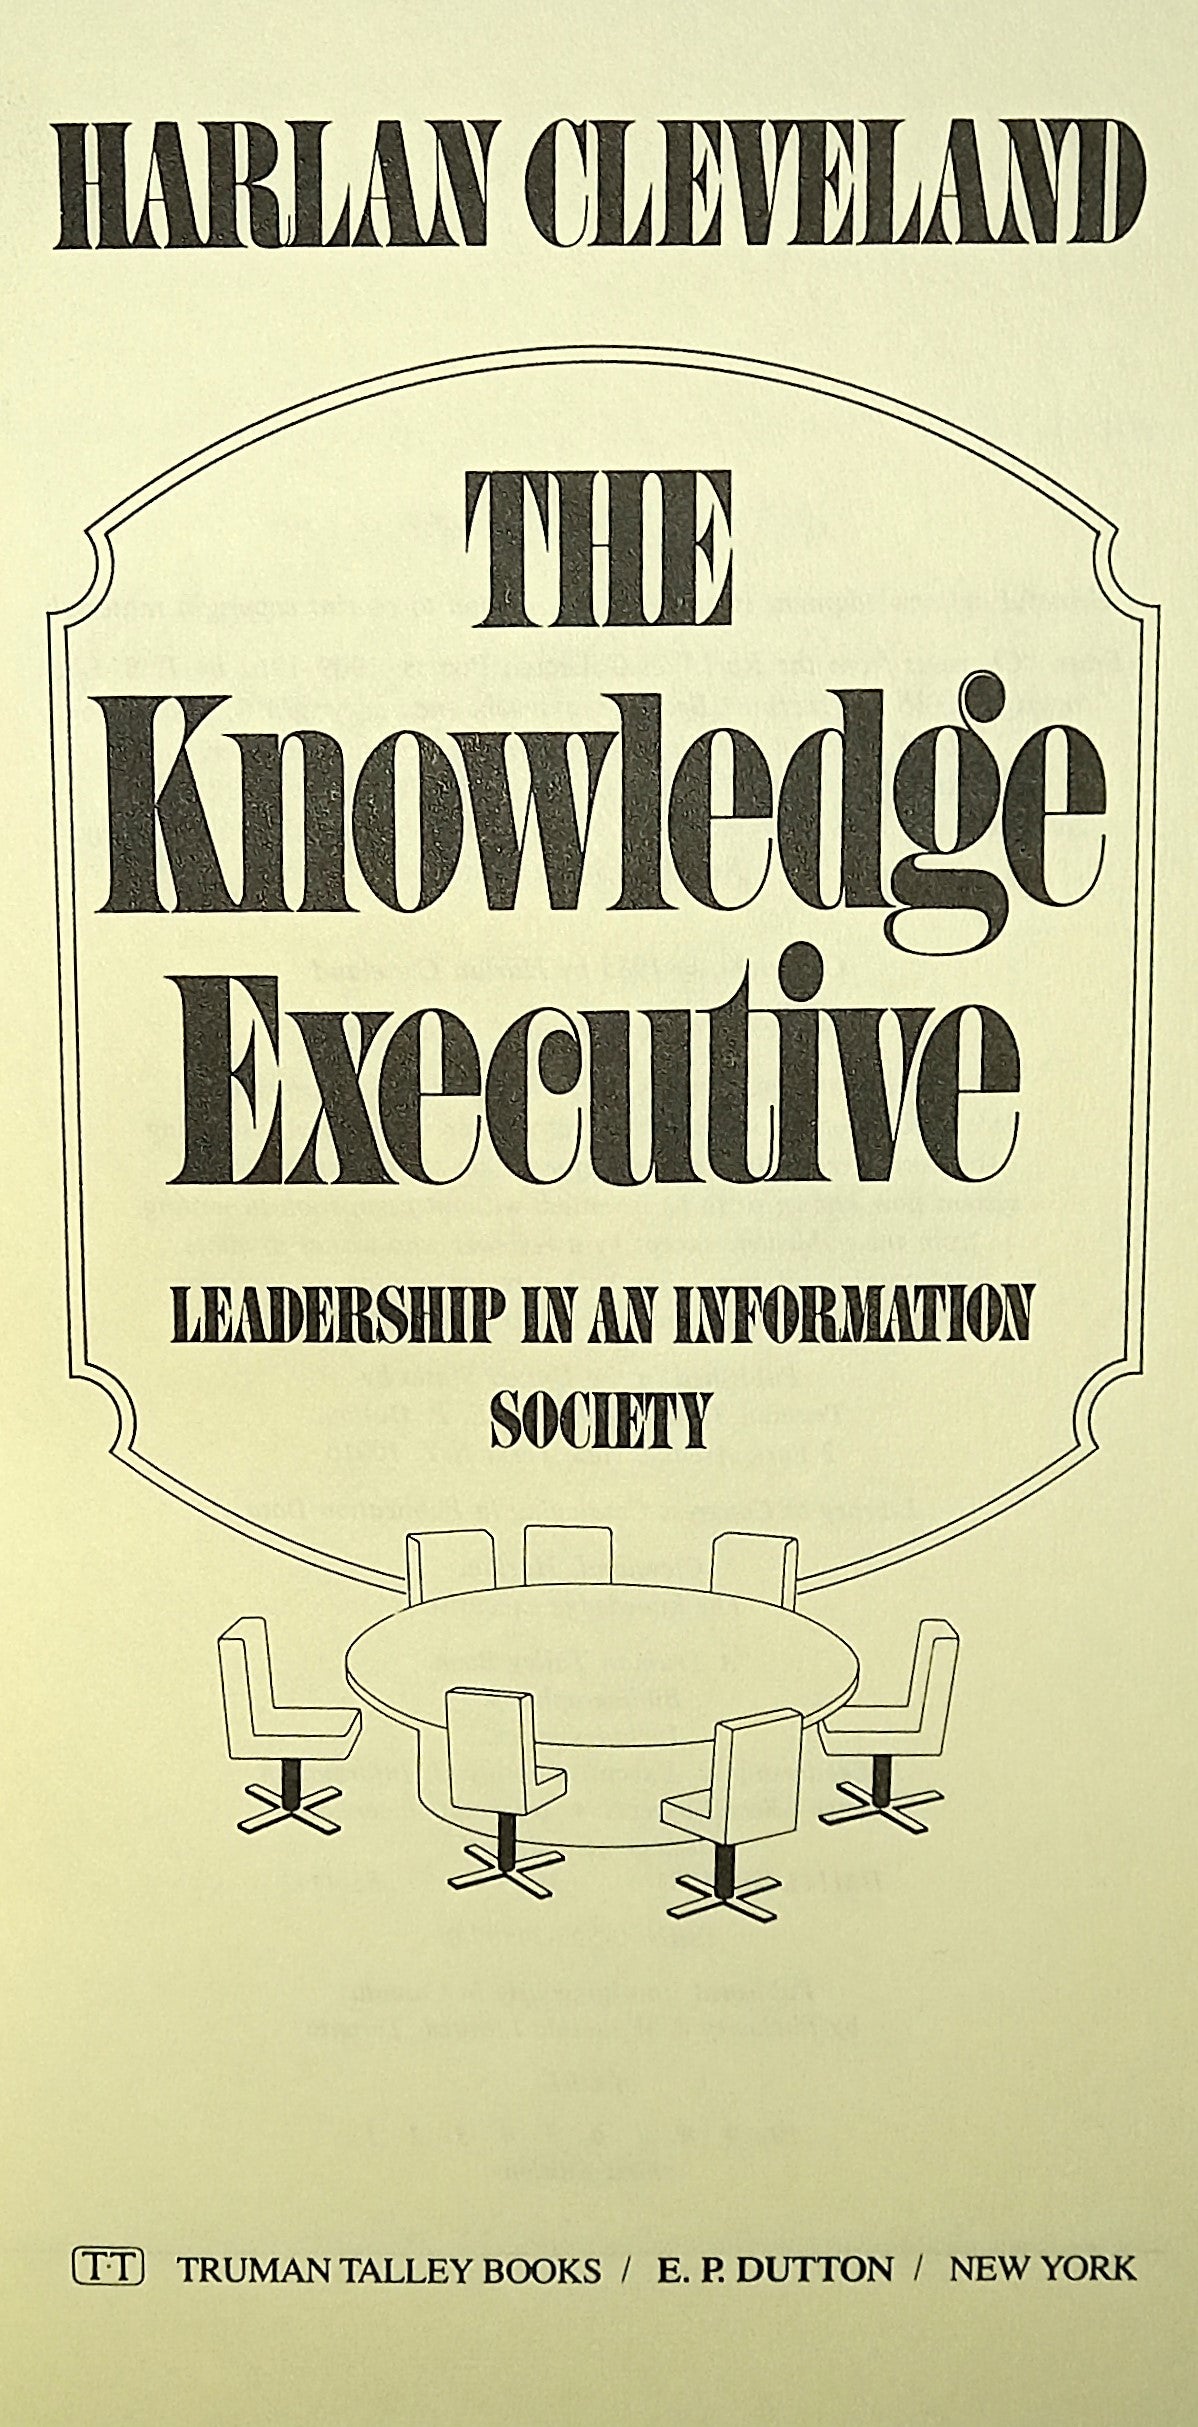 The Knowledge Executive